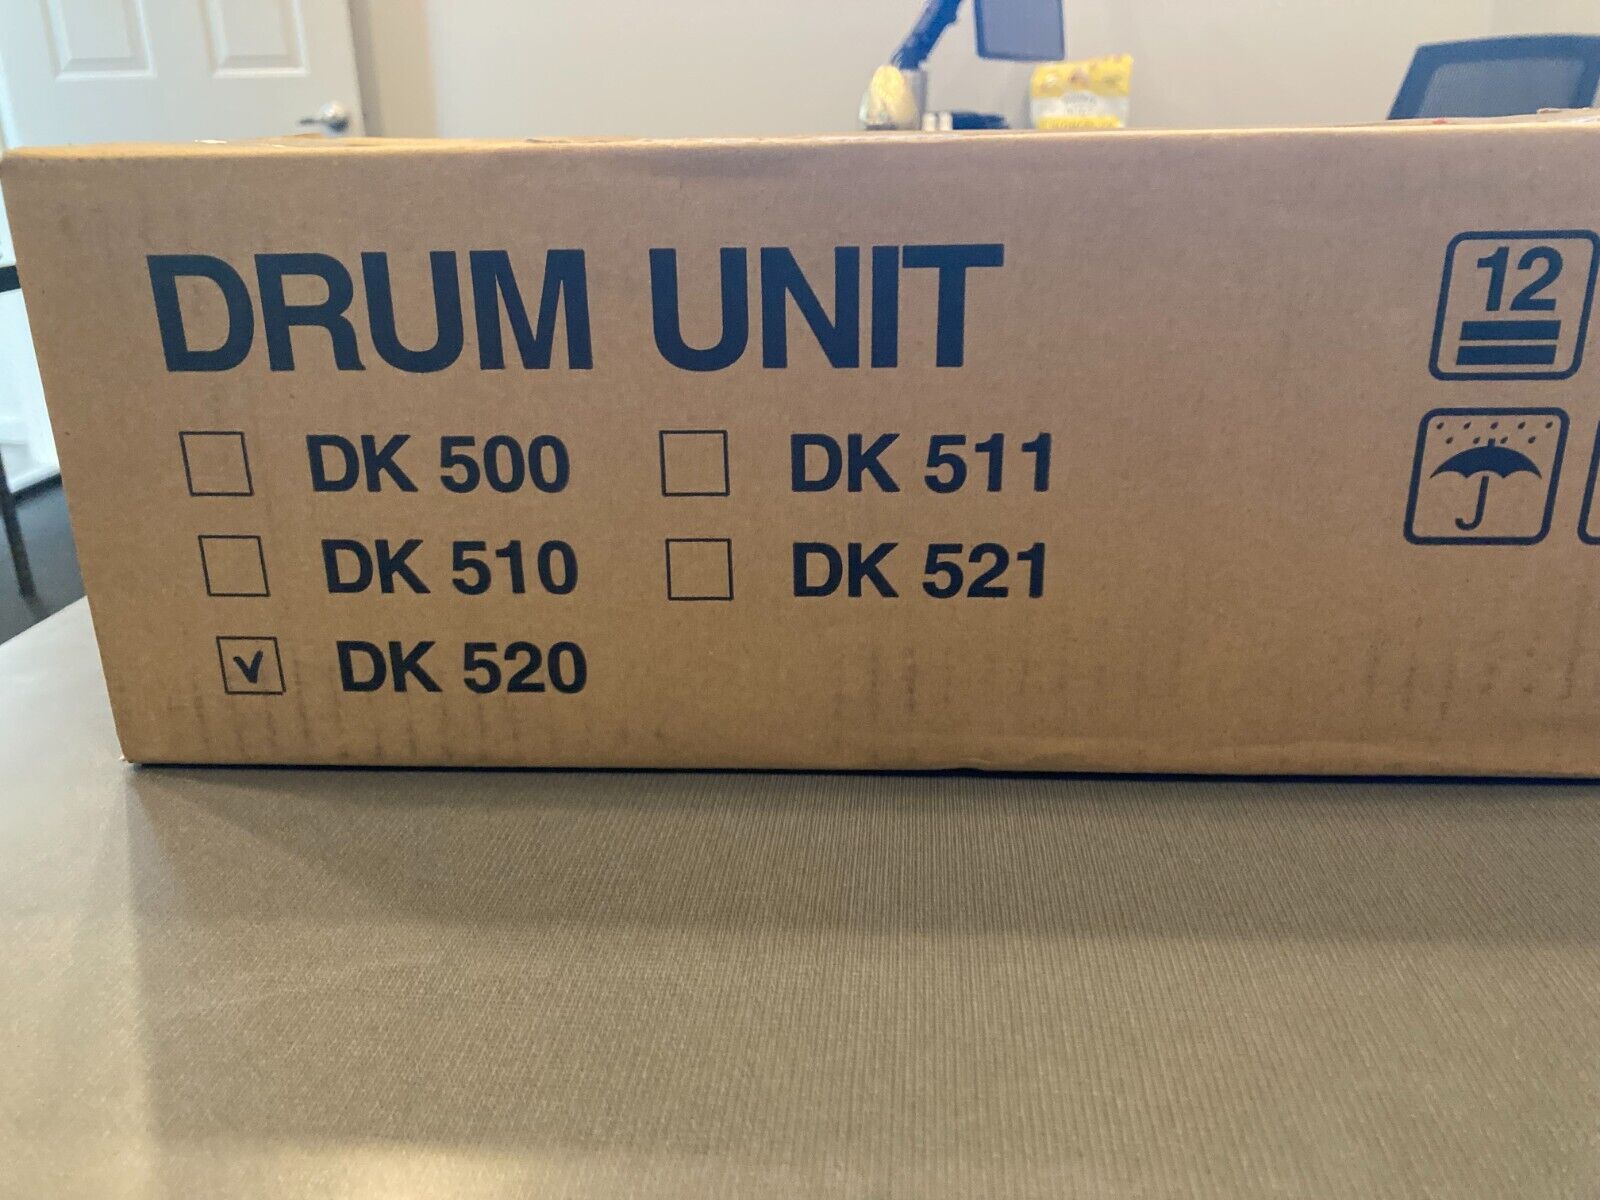 DK520 DRUM UNIT